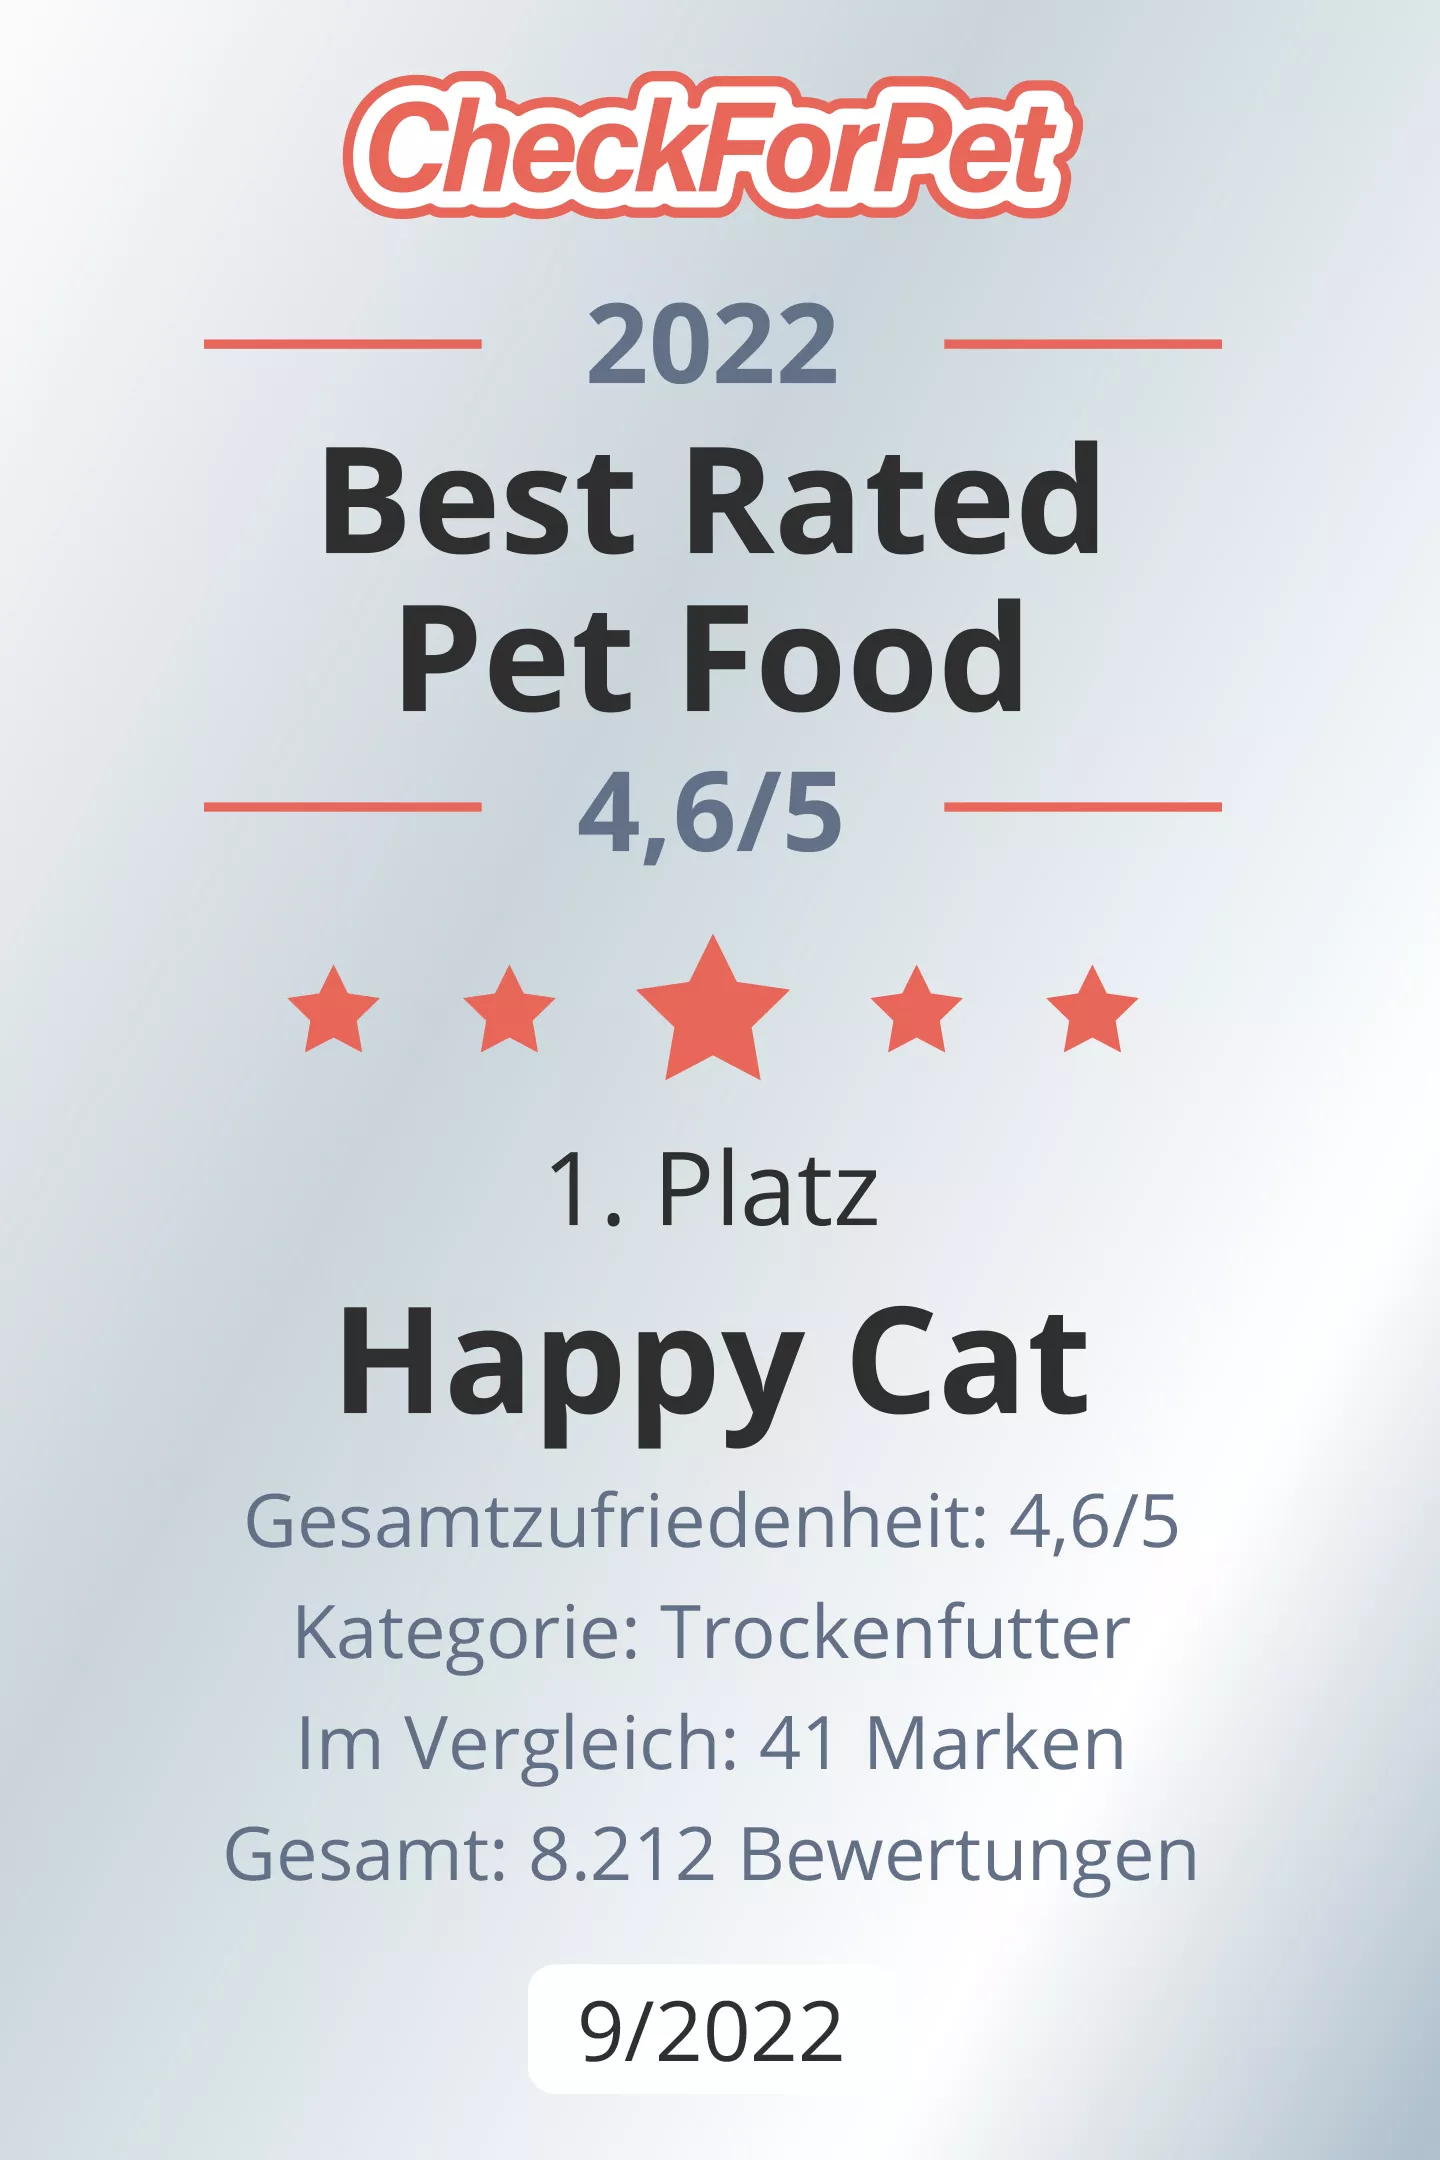 Happy Cat Minkas Perfect Mix Geflügel, Fisch & Lamm 500 g